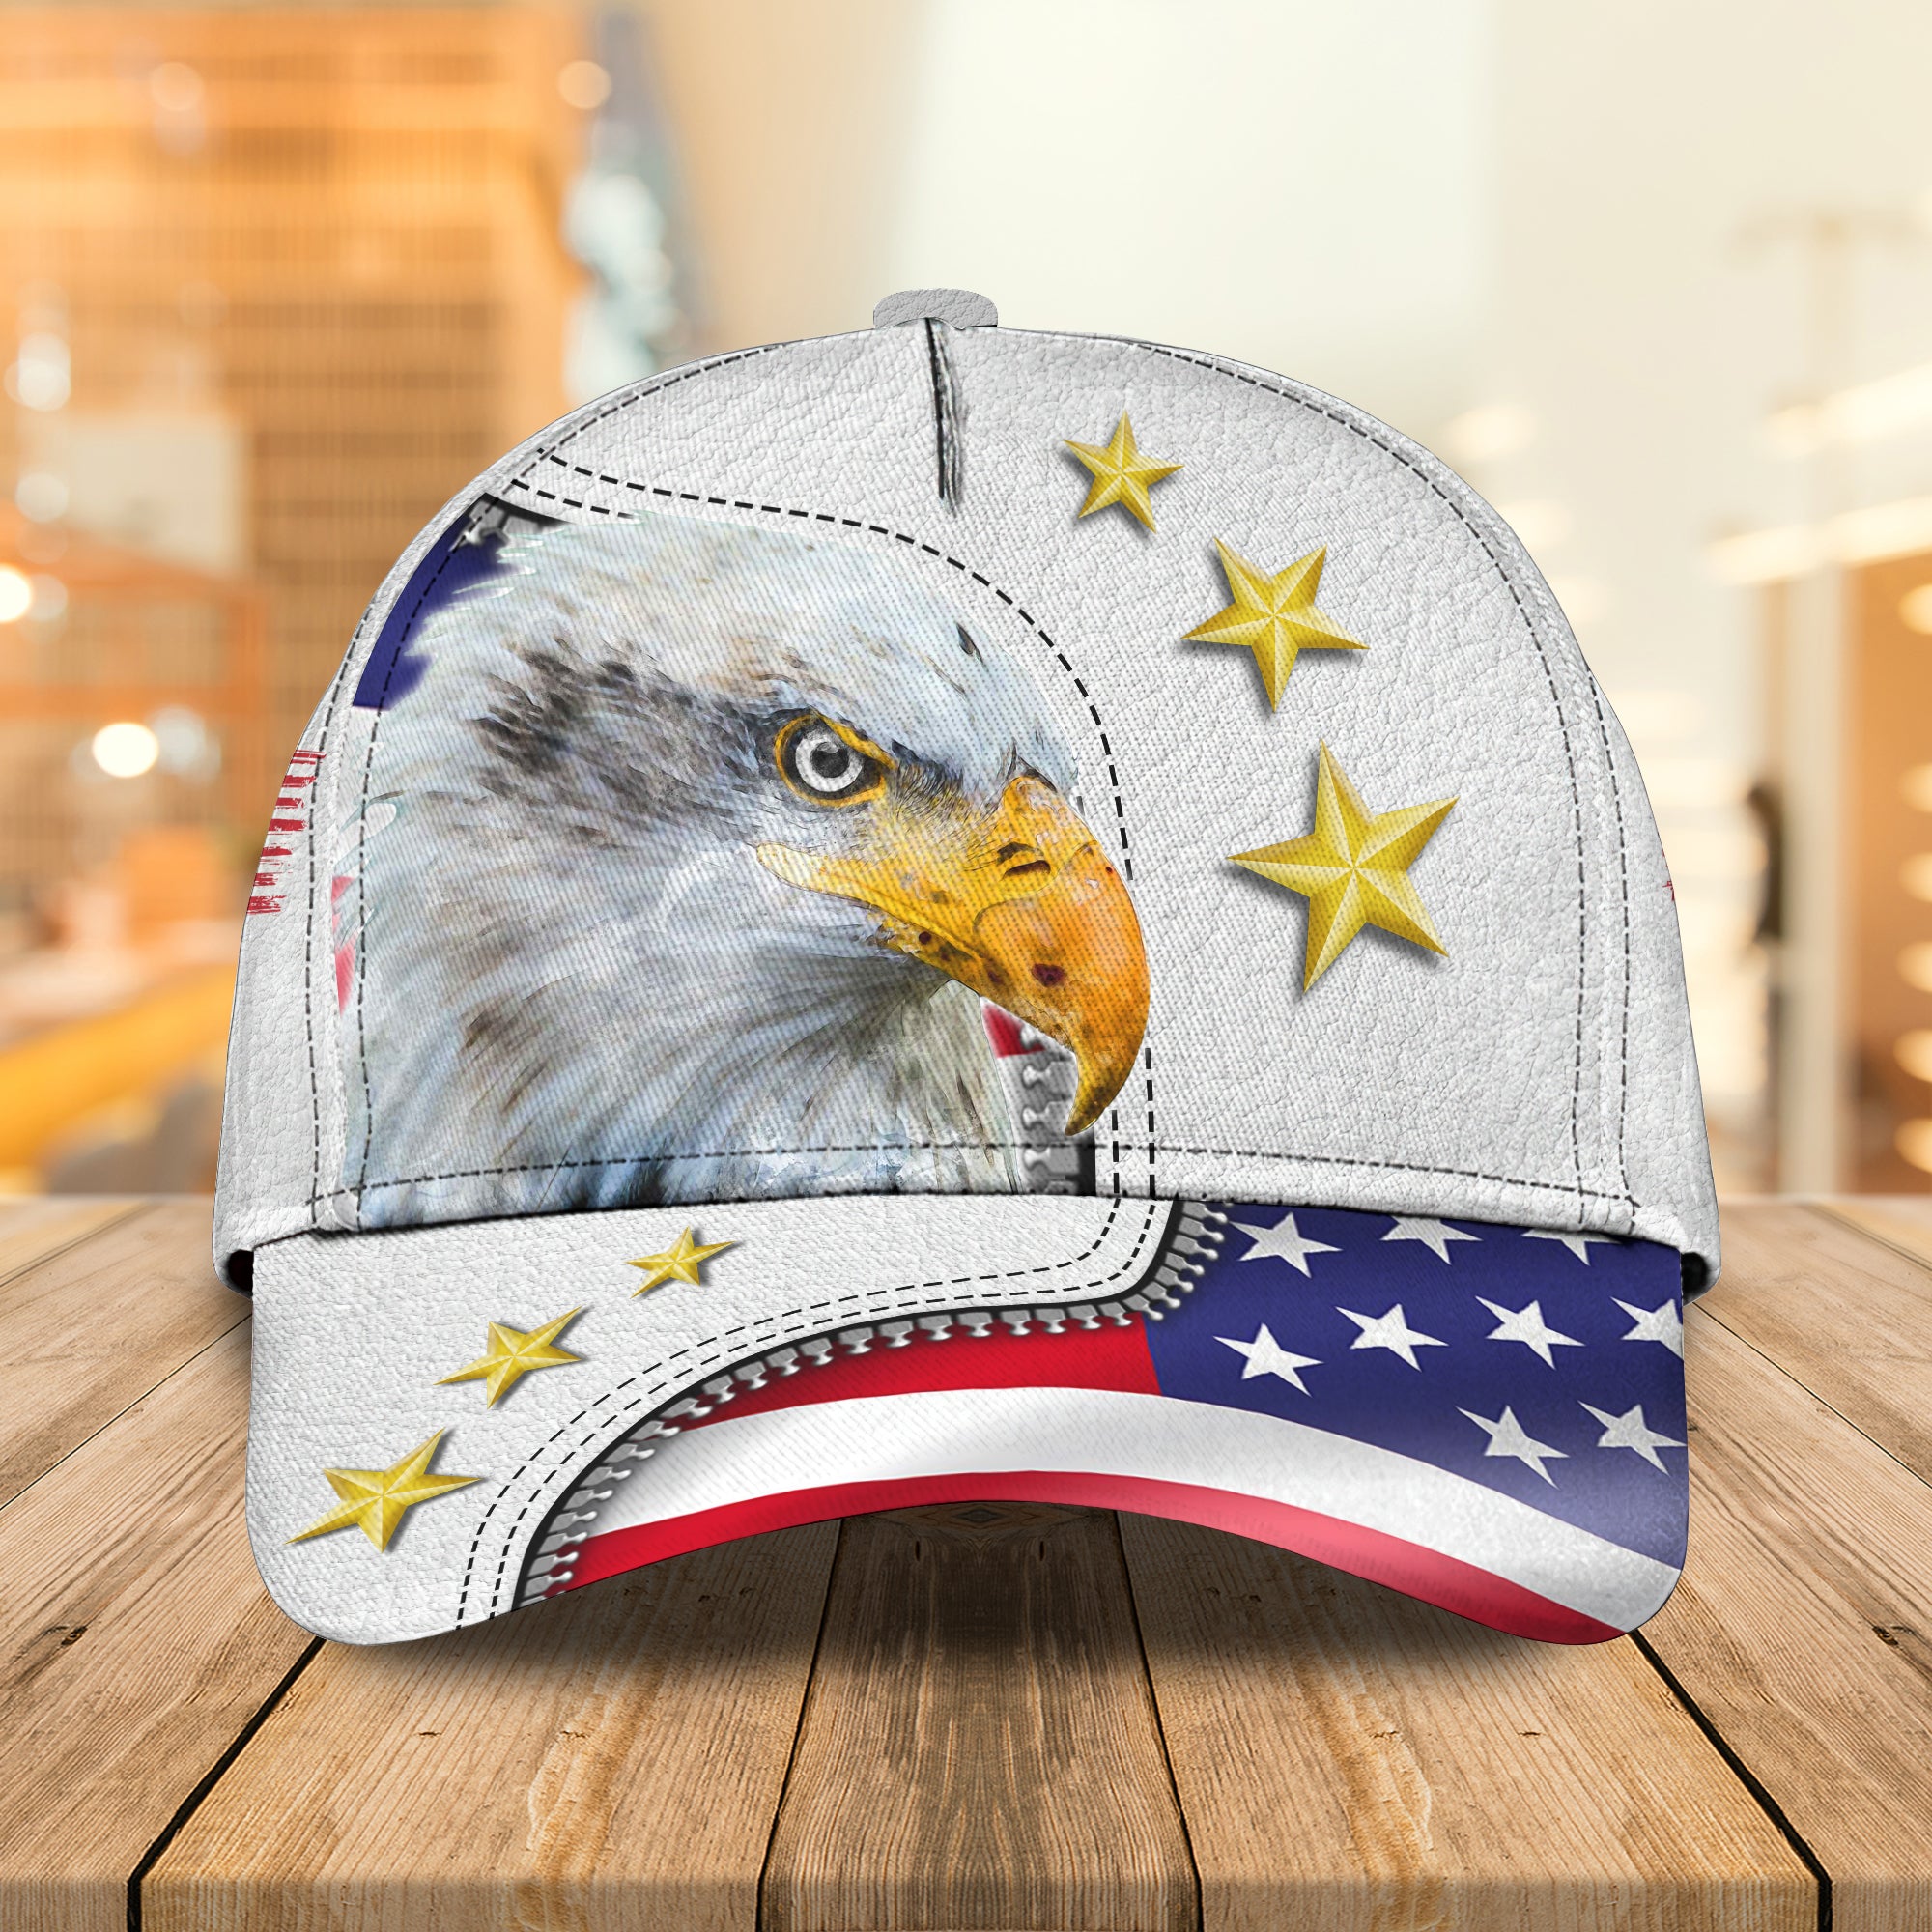 American Eagle - Personalized Name Cap - Vhv-cap-011